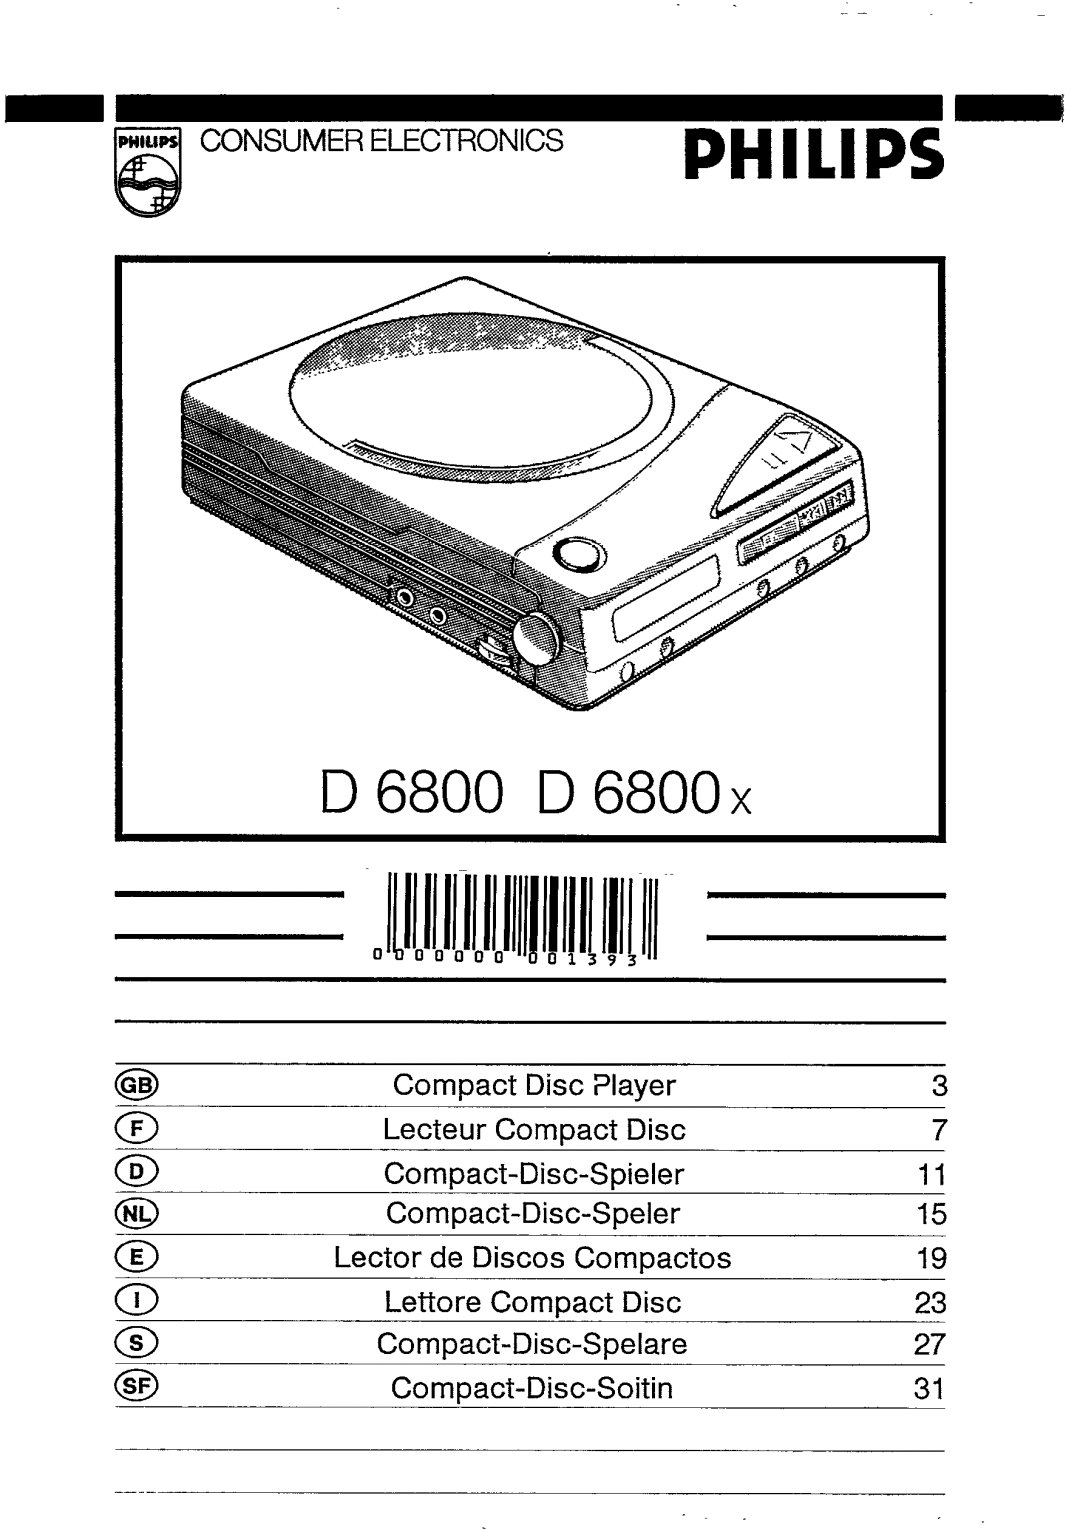 Philips D 6800x manual 